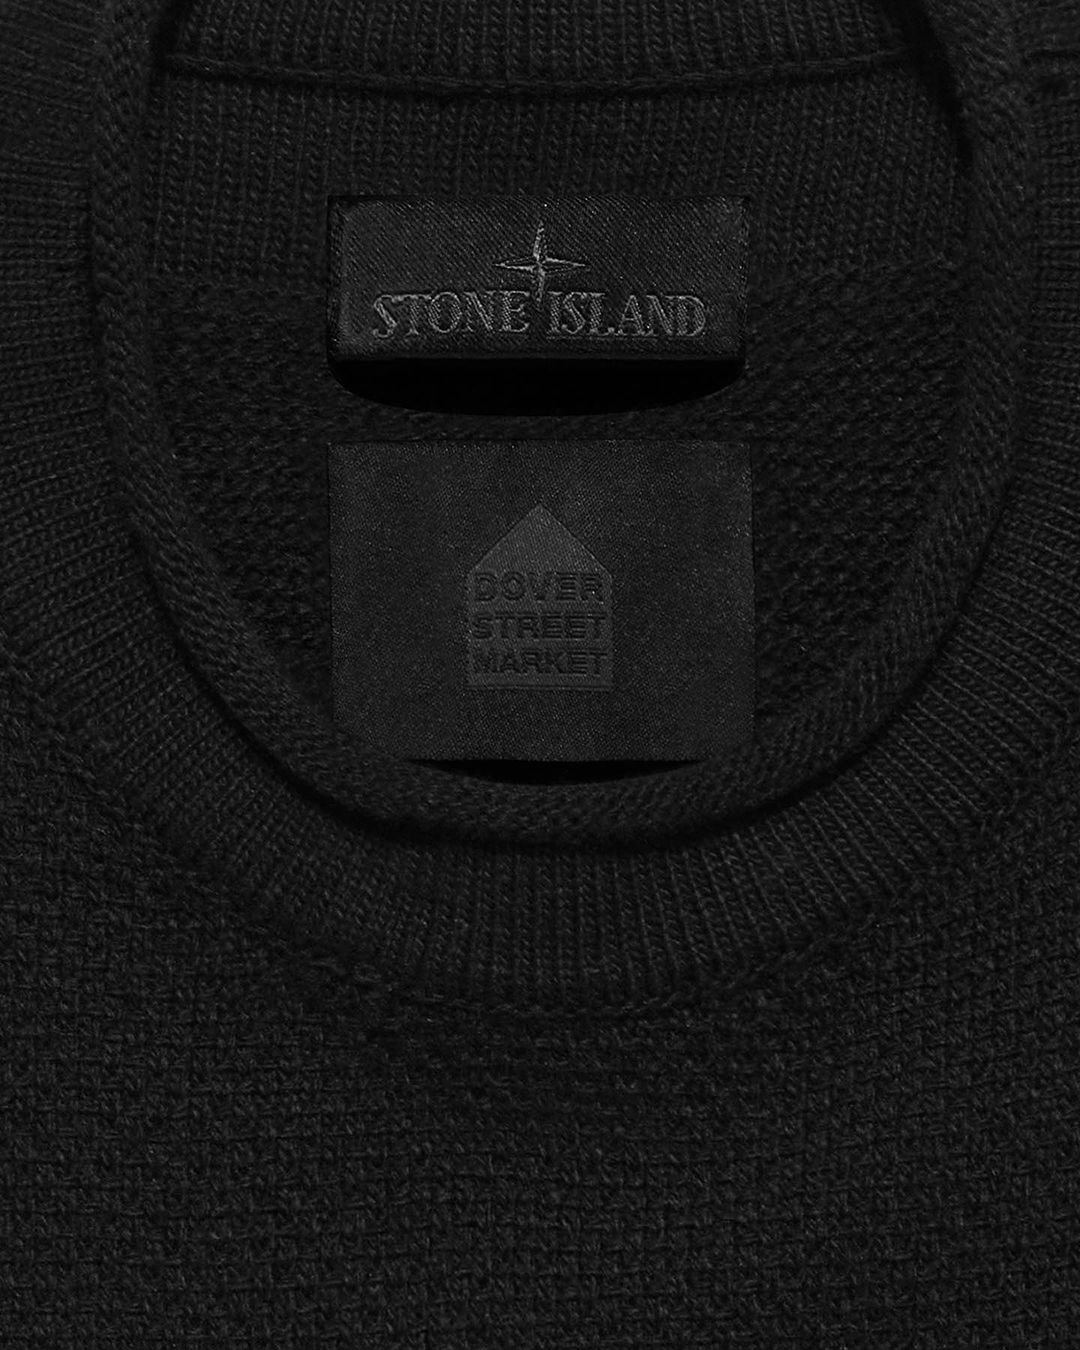 Stone Island x Dover Street Market 全新聯名系列即將發售